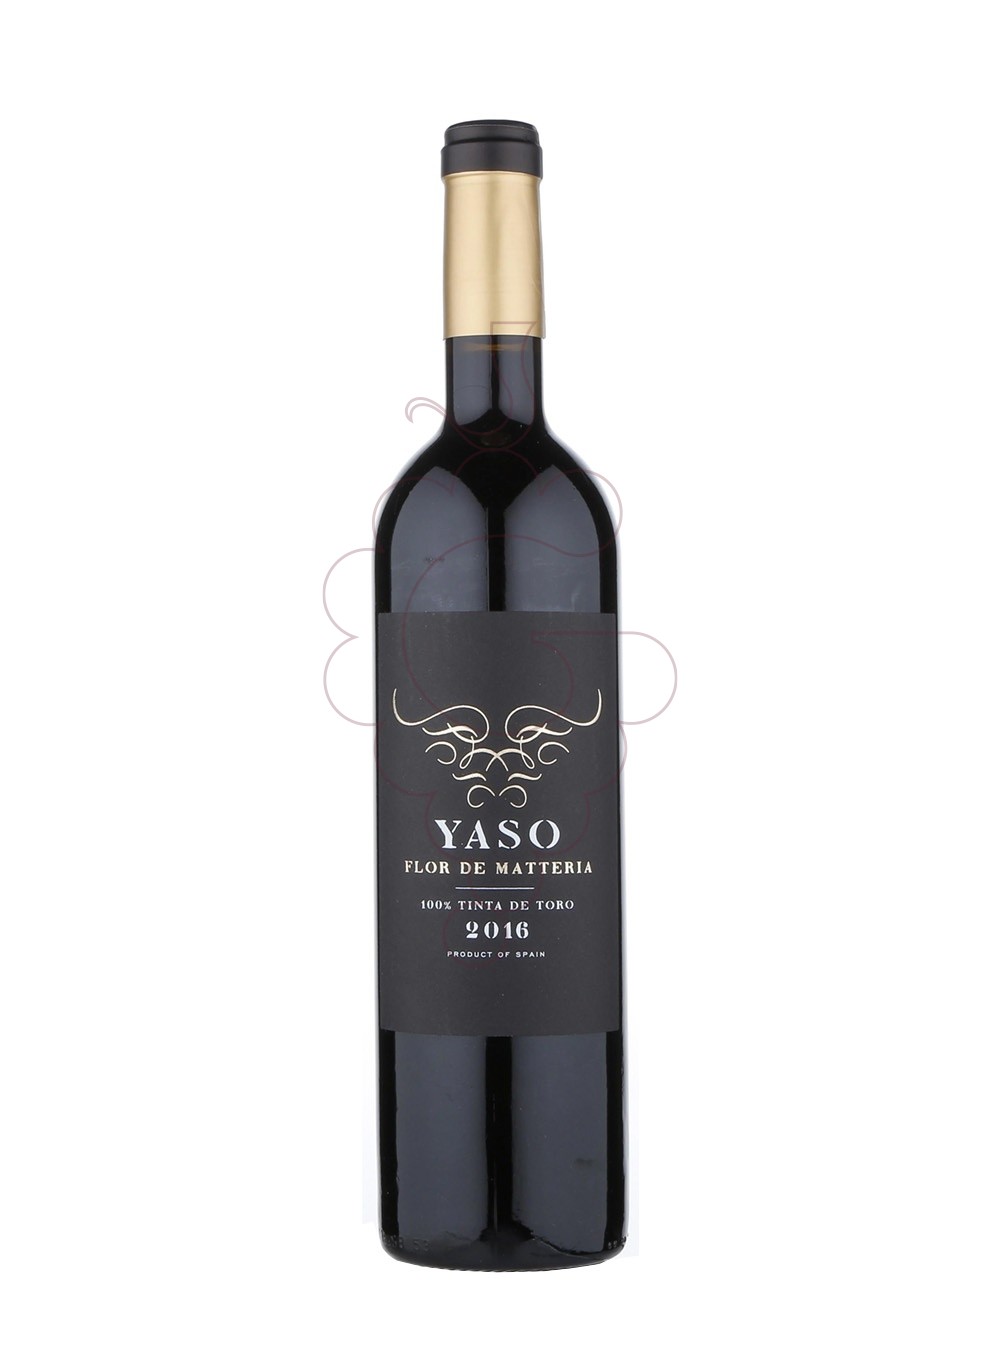 Photo Yaso flor de matteria 2016 red wine